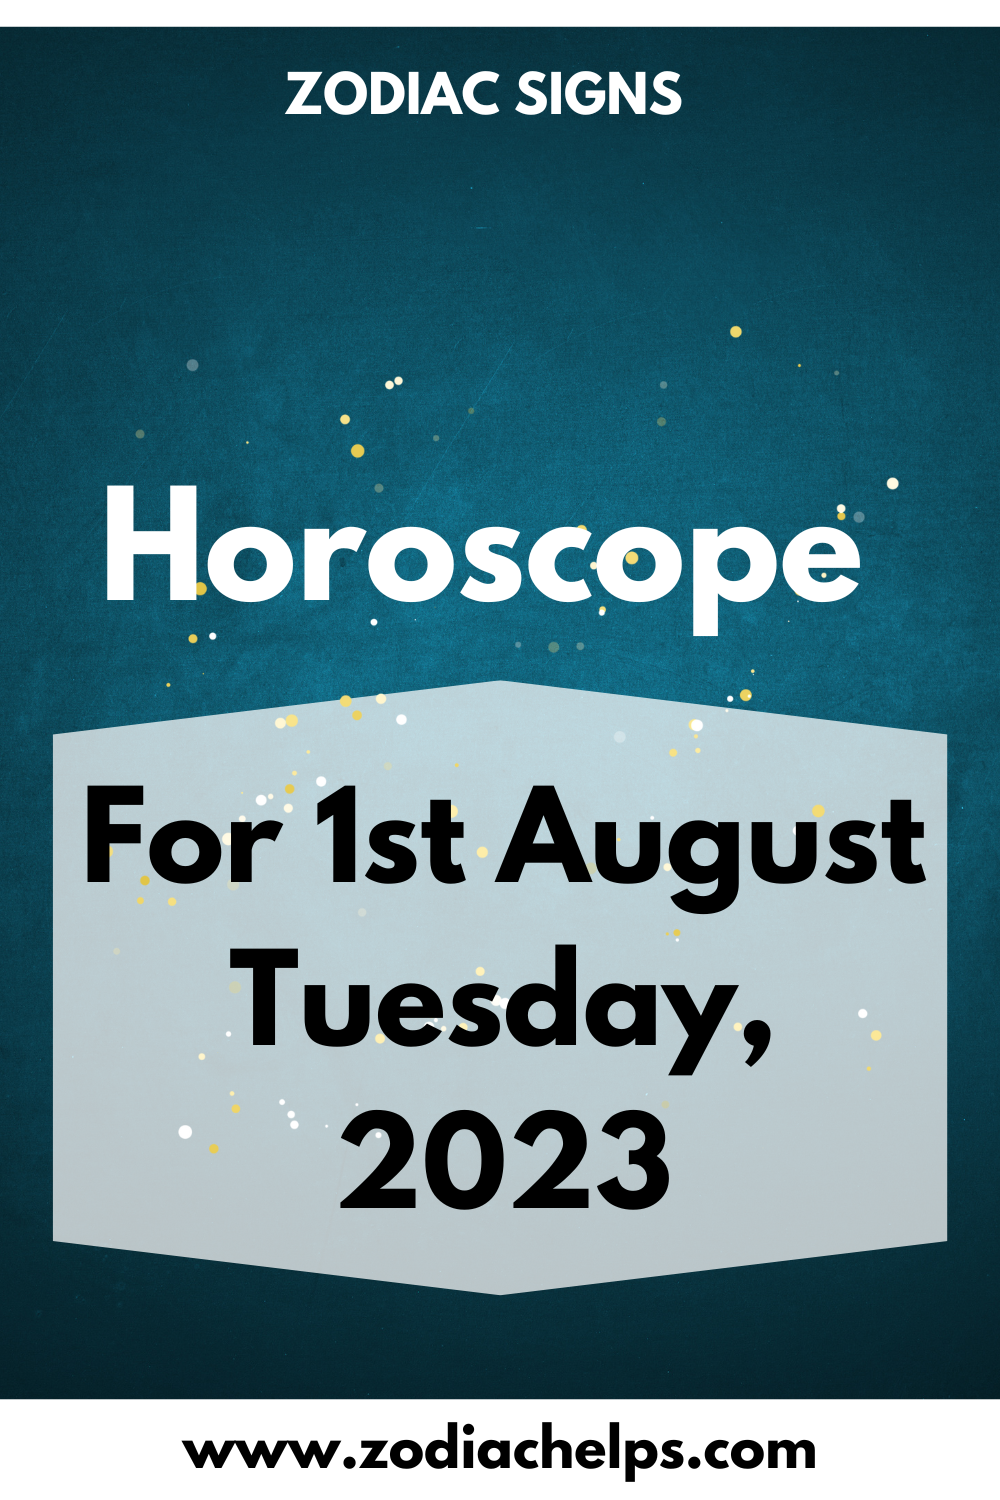 Horoscope for 1st August Tuesday, 2023